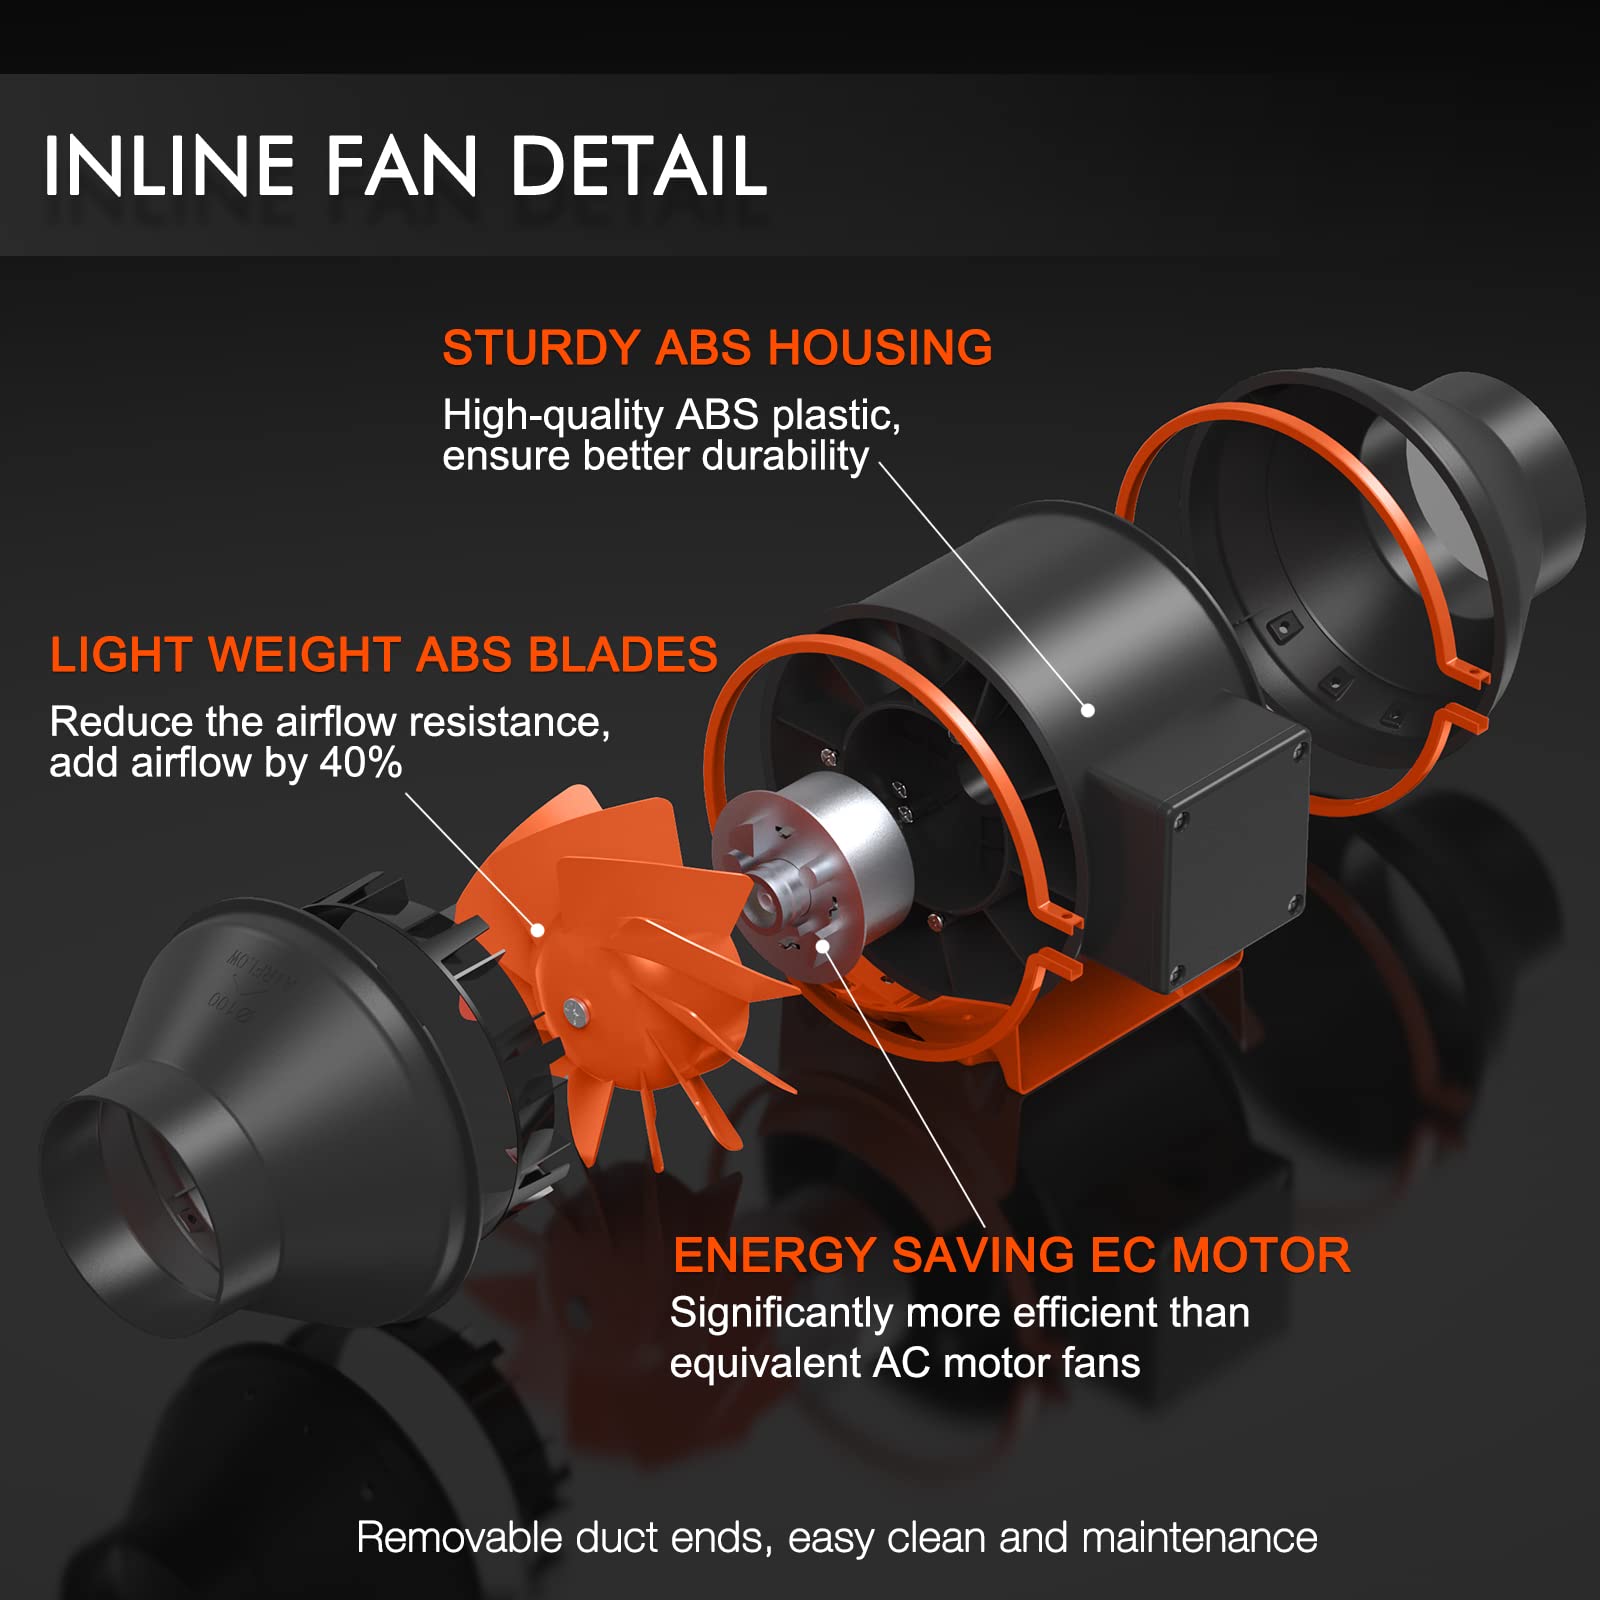 Spider Farmer® SF1000D LED Grow Light+2’x2′X4.6′ Grow Tent + Inline Fan with Speed Controller